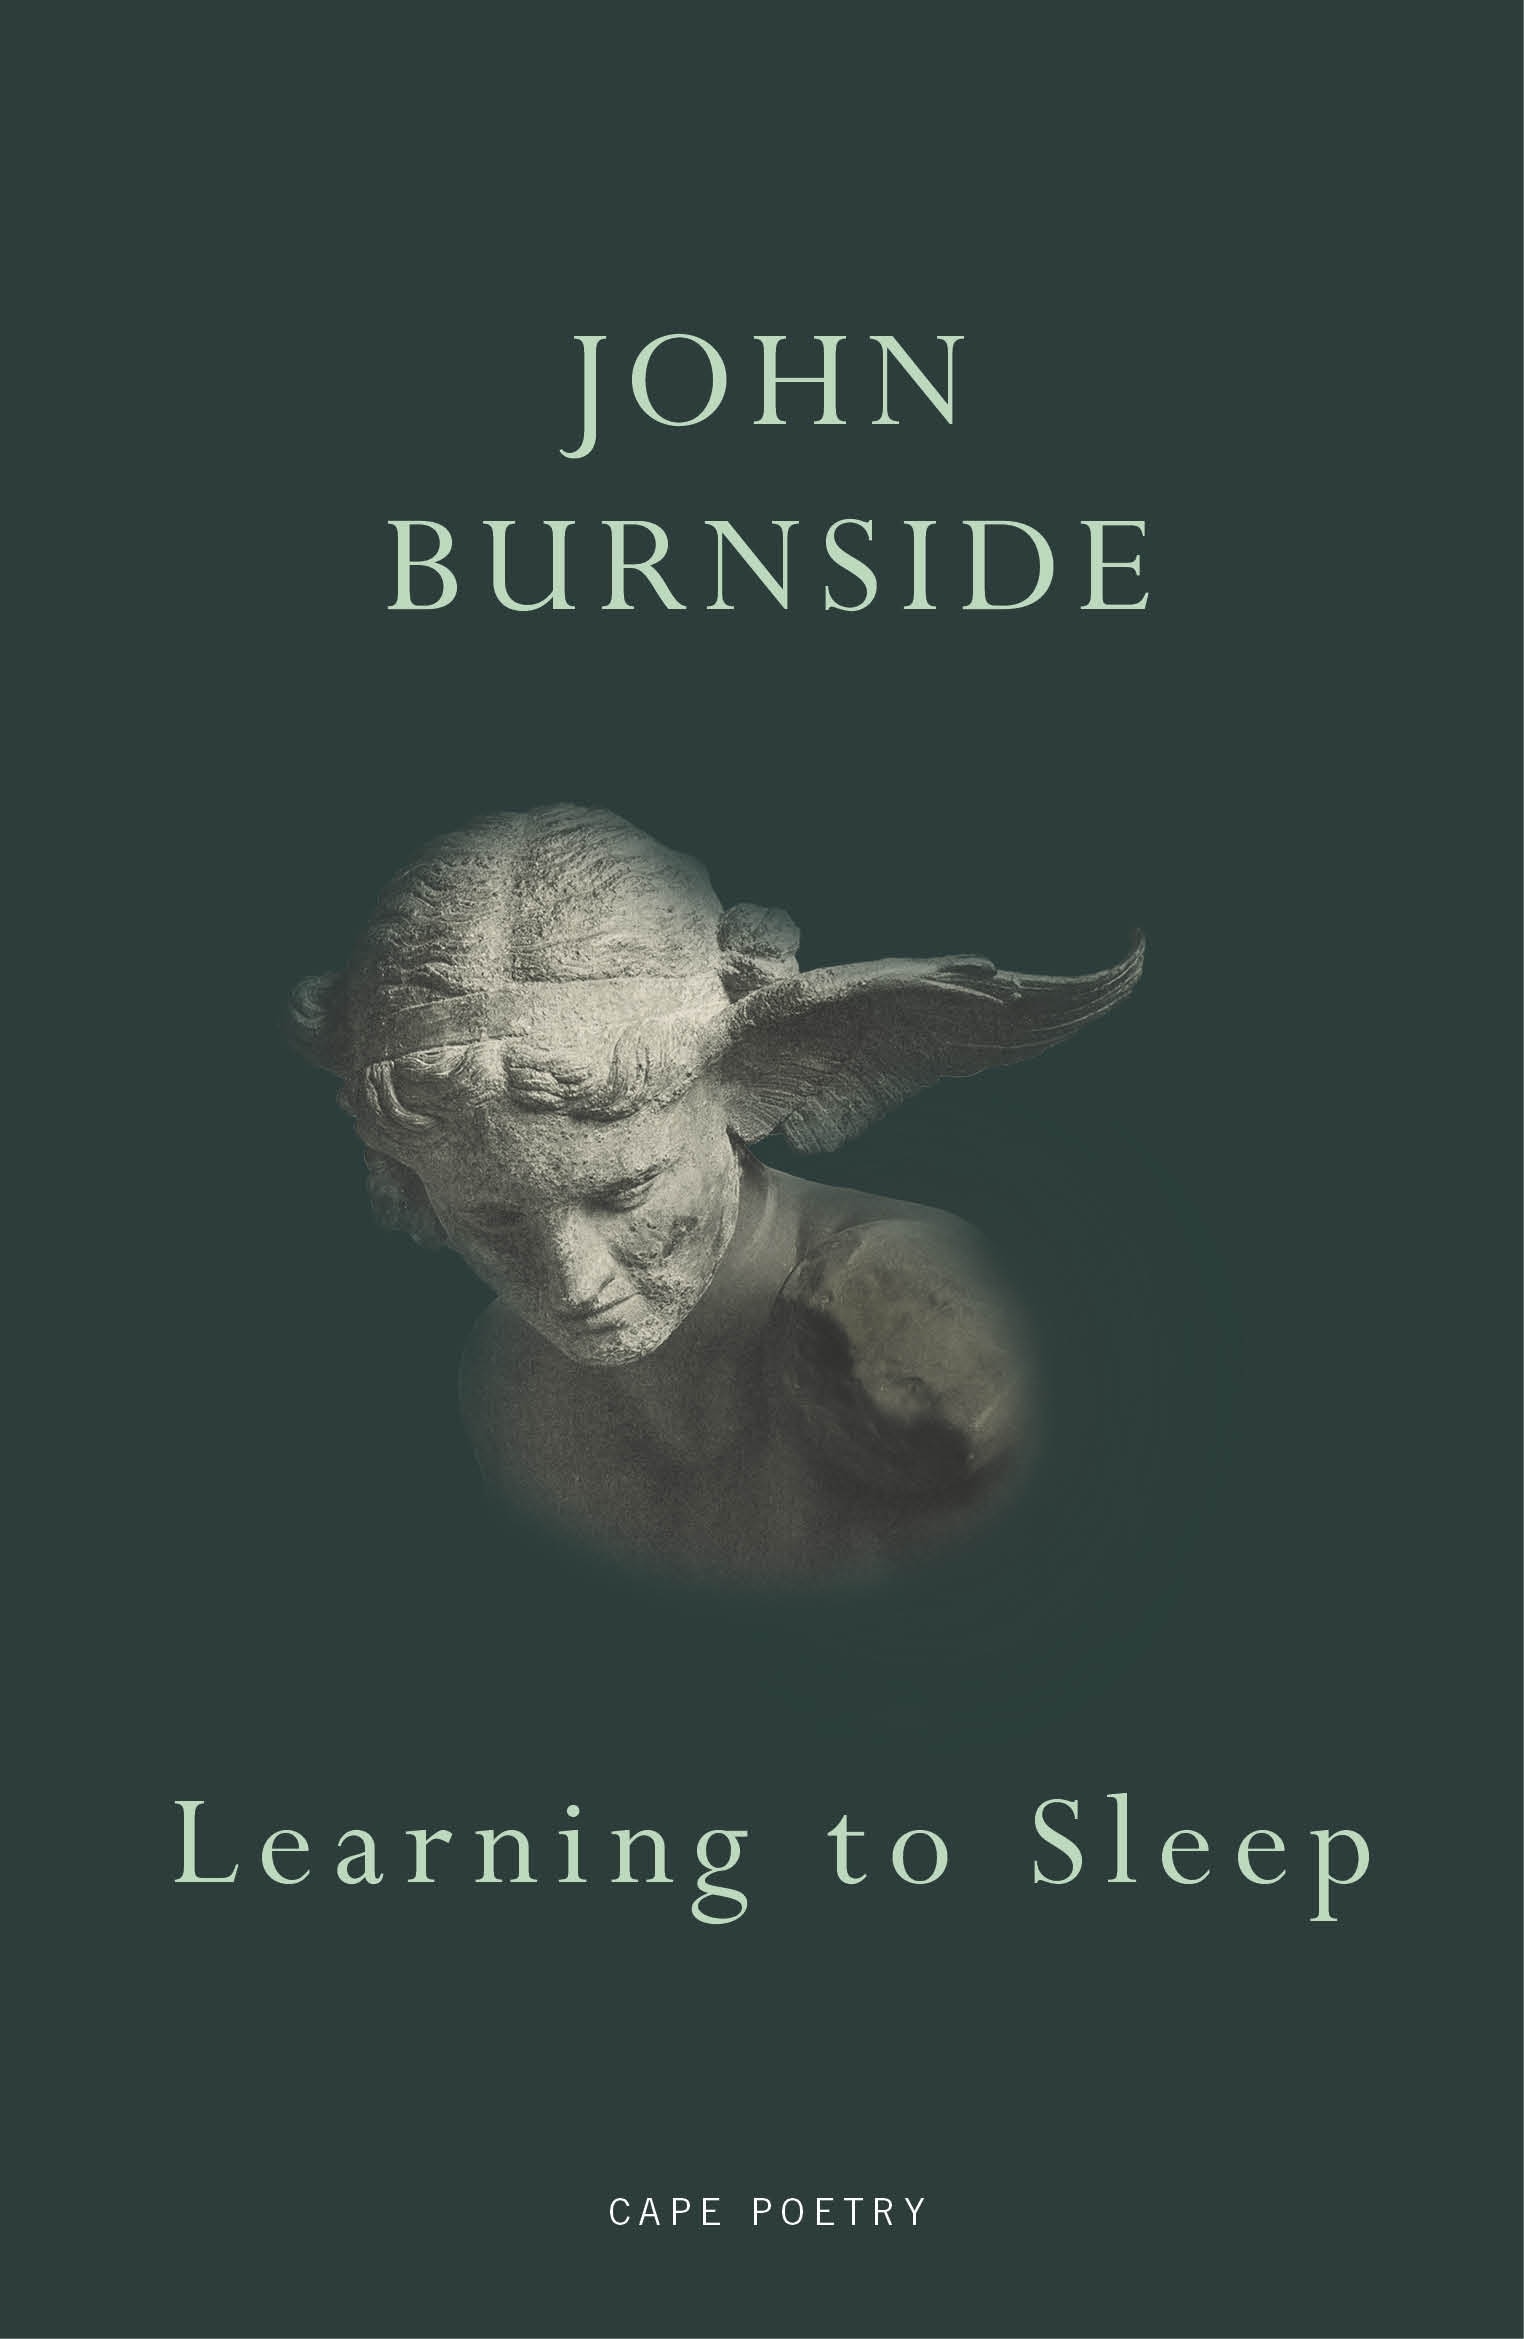 Book “Learning to Sleep” by John Burnside — August 5, 2021